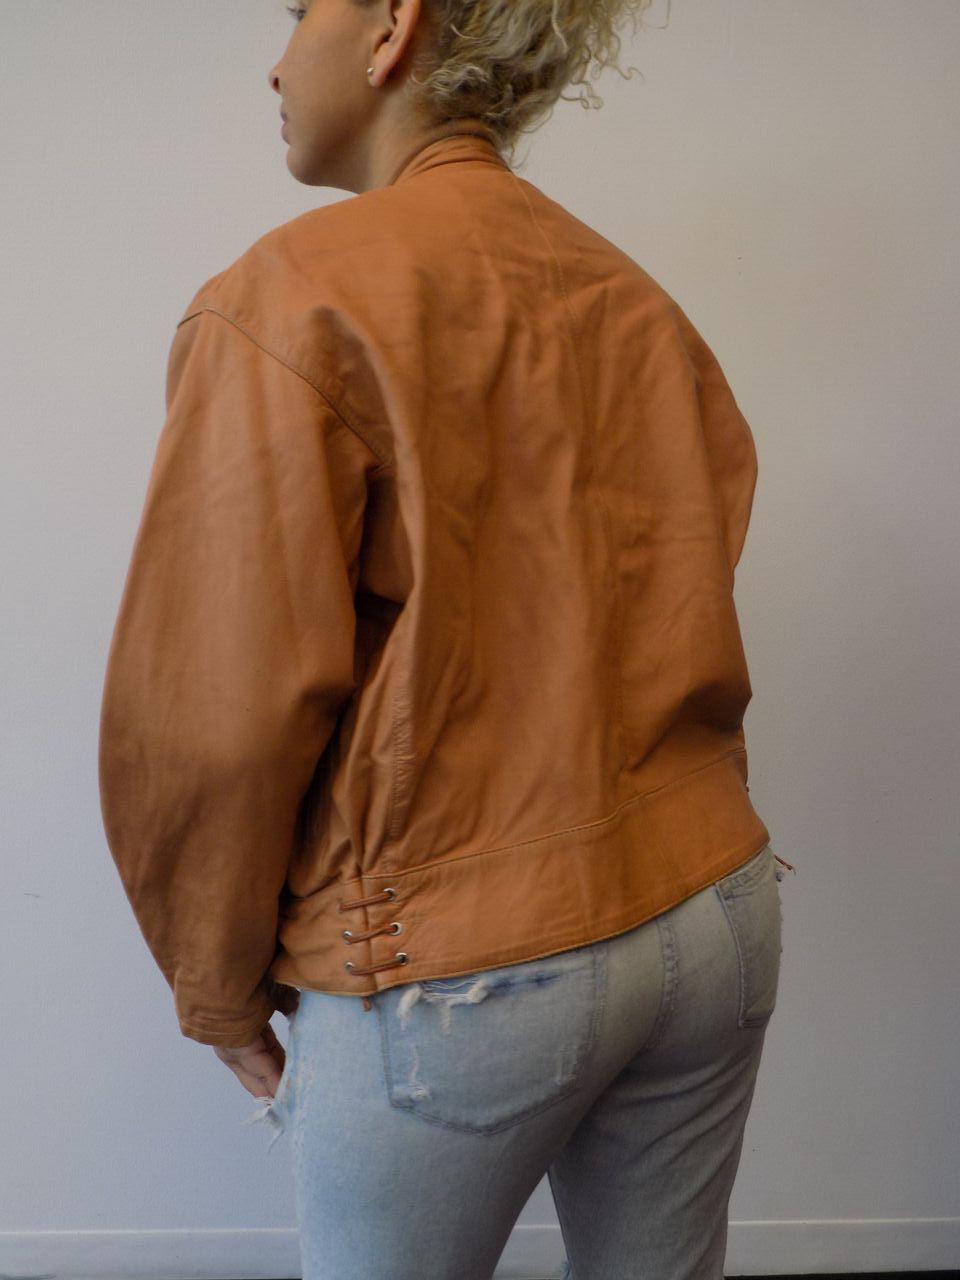 Paco Rabanne Leather Jacket